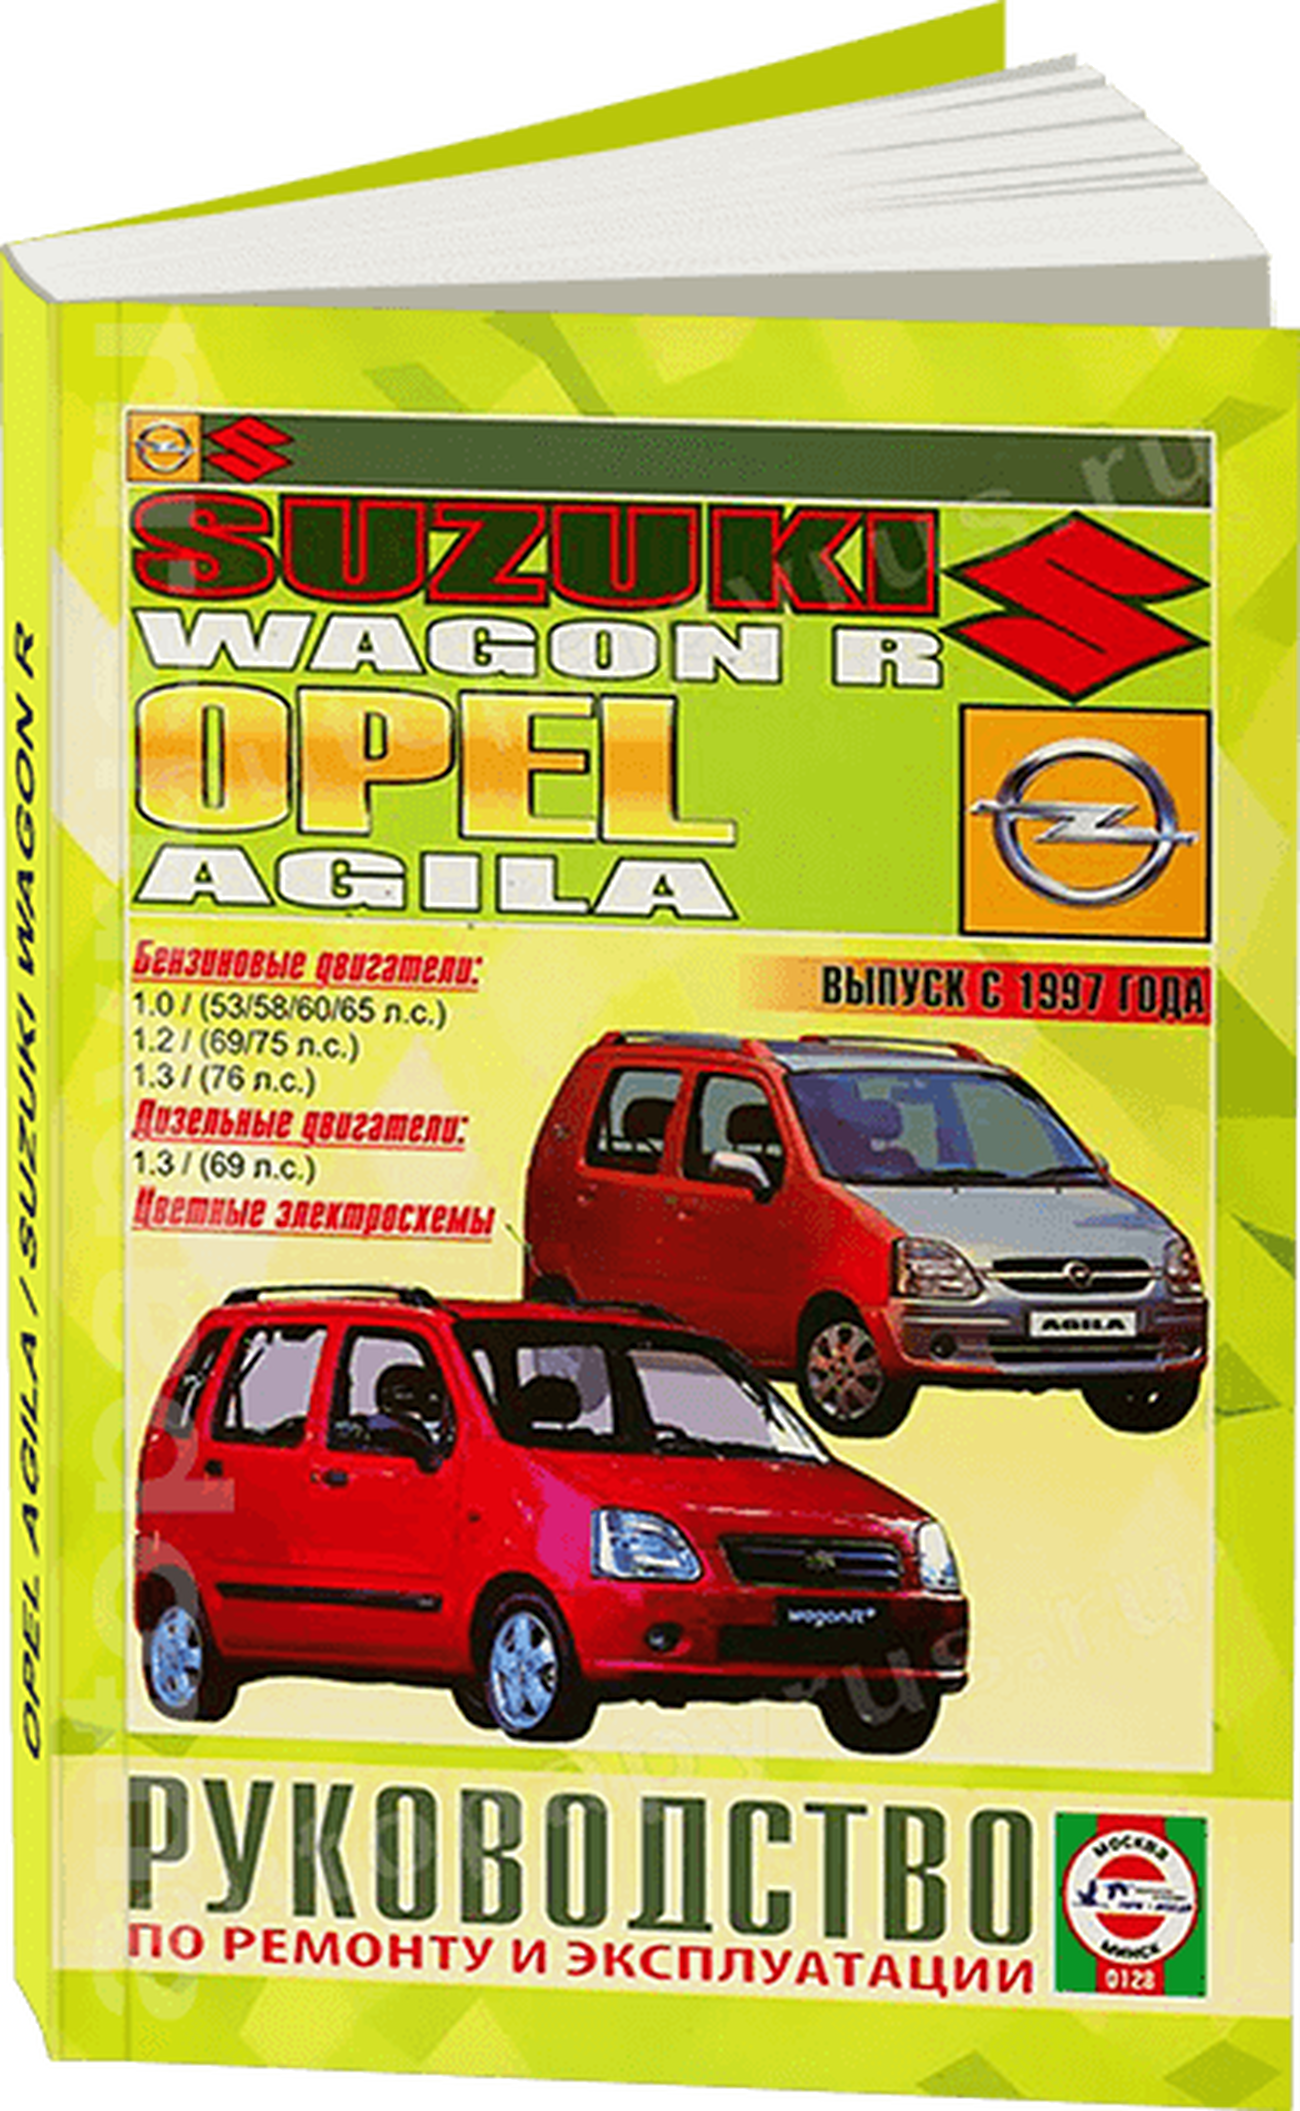 Книга: SUZUKI WAGON R / OPEL AGILA (б , д) с 1997 г.в., рем., экспл., то | Чижовка